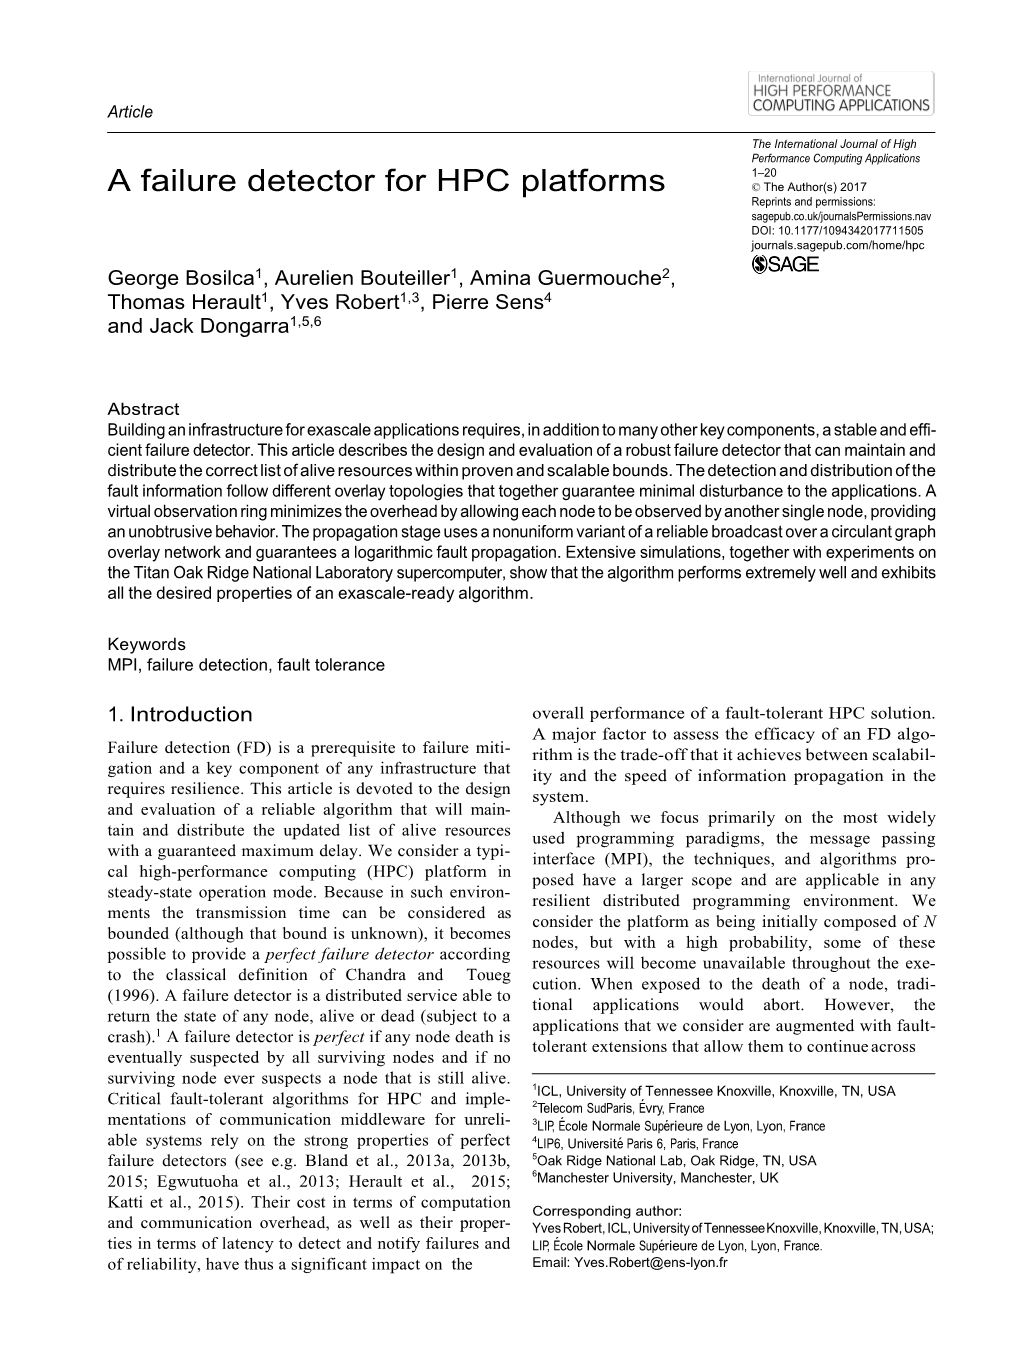 A Failure Detector for HPC Platforms